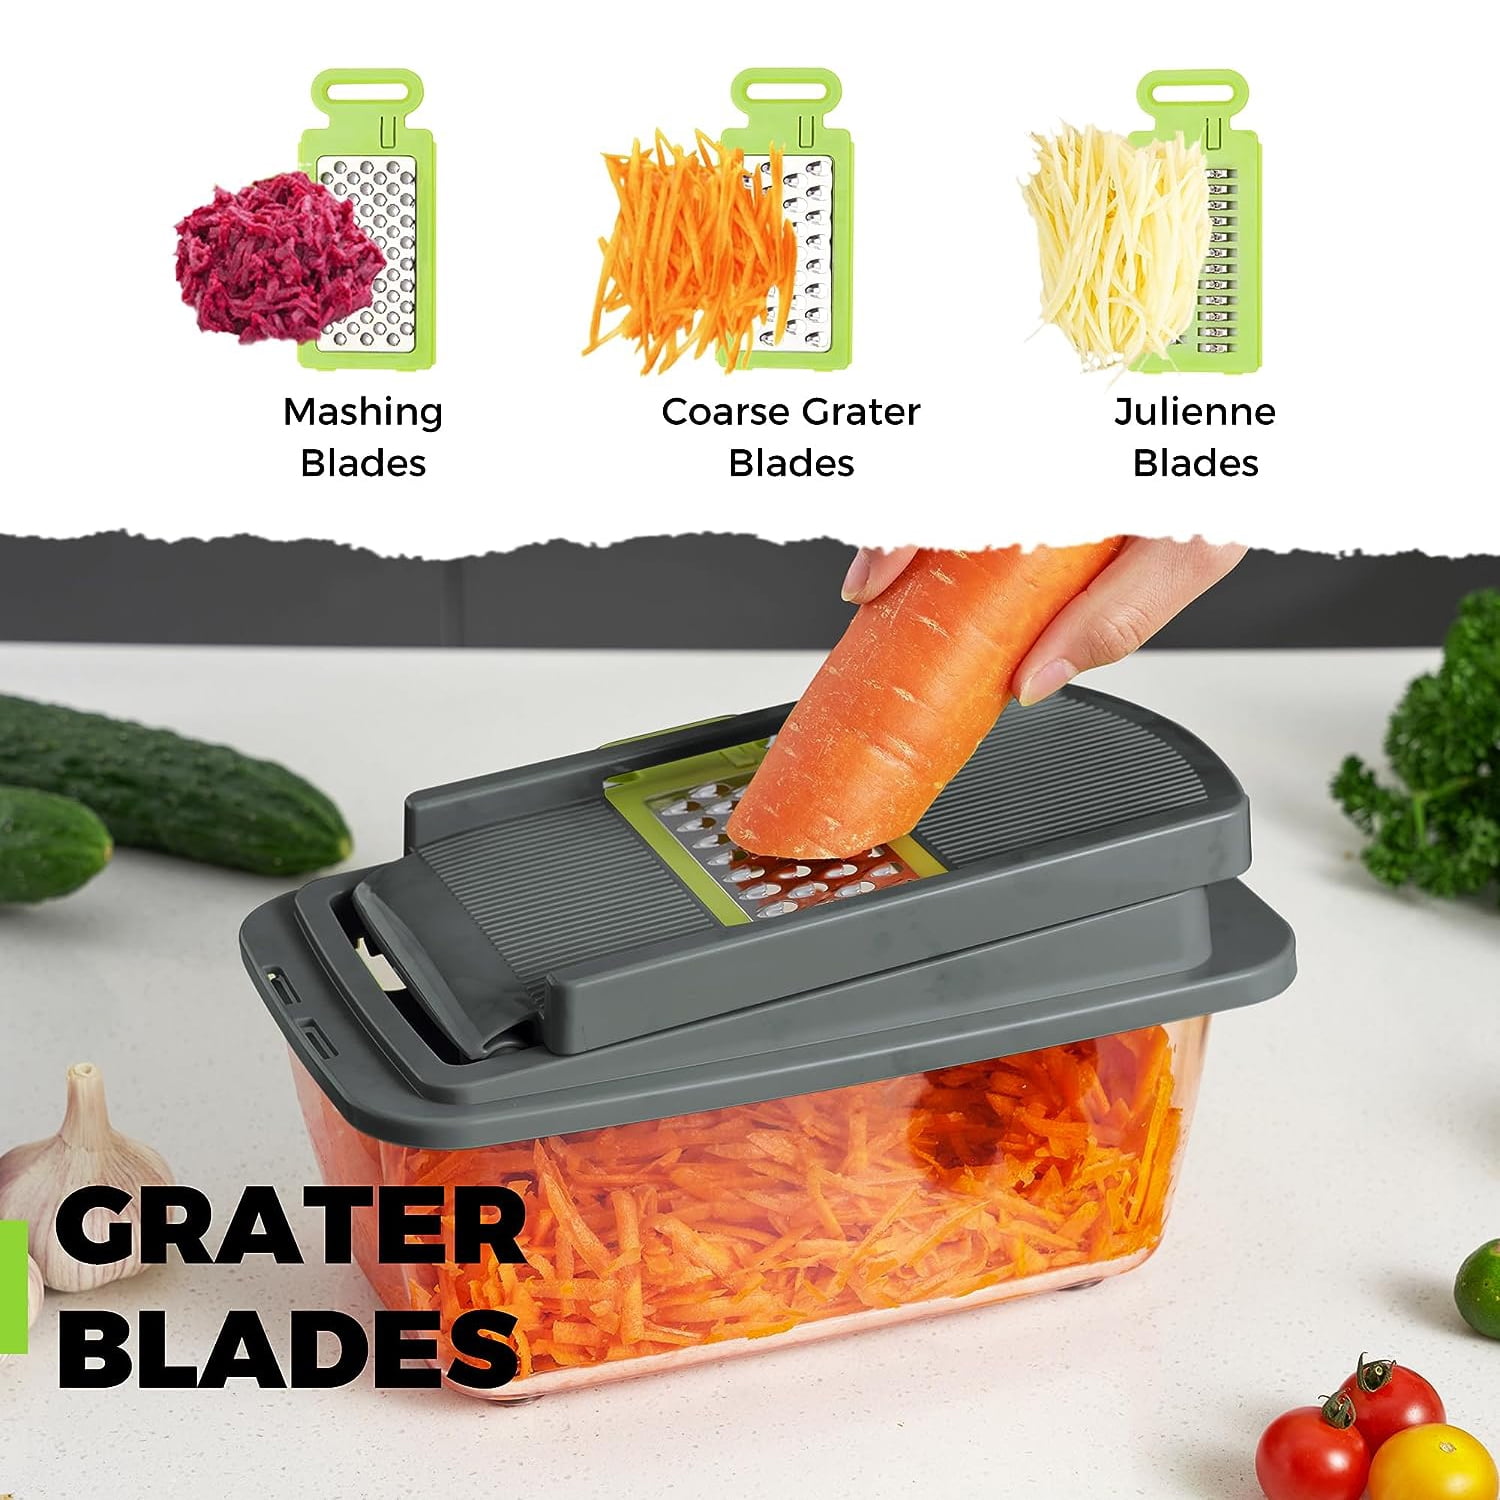 13 in 1 Vegetable Slicer Cutter Chopper Dicer Veggie Fruit Kitchen Tool+8  Blades - SIZE - Bed Bath & Beyond - 18800385